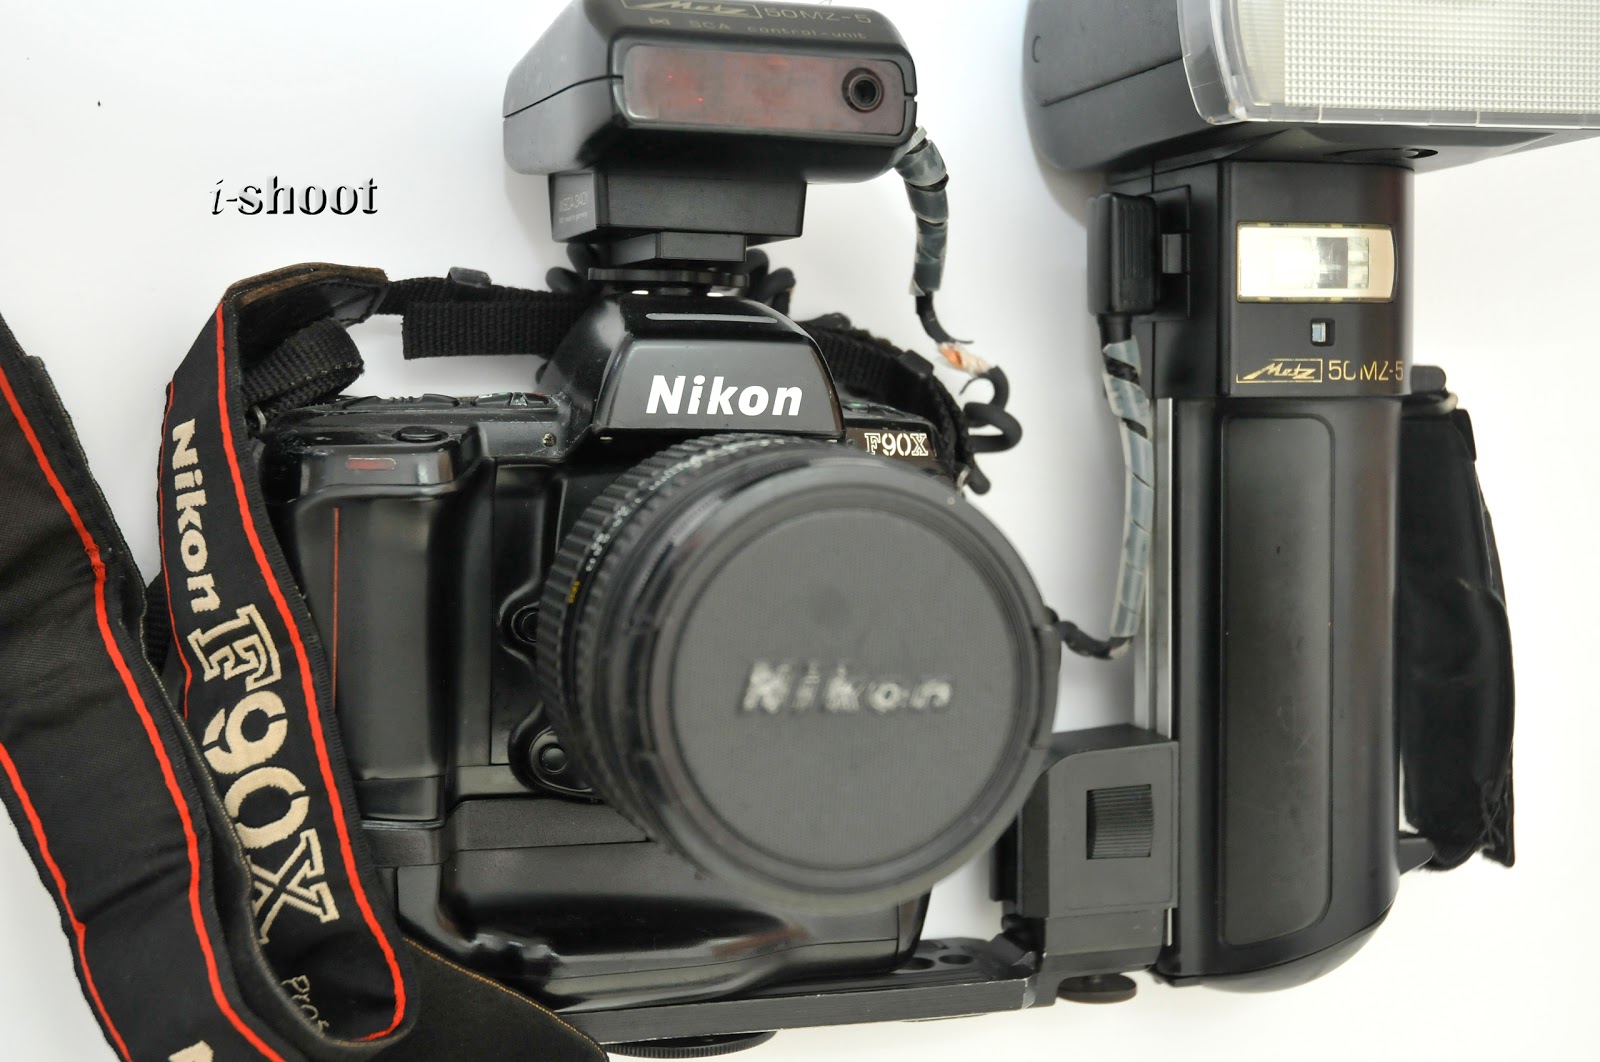 i-shoot: Still My Nikon F90X Camera